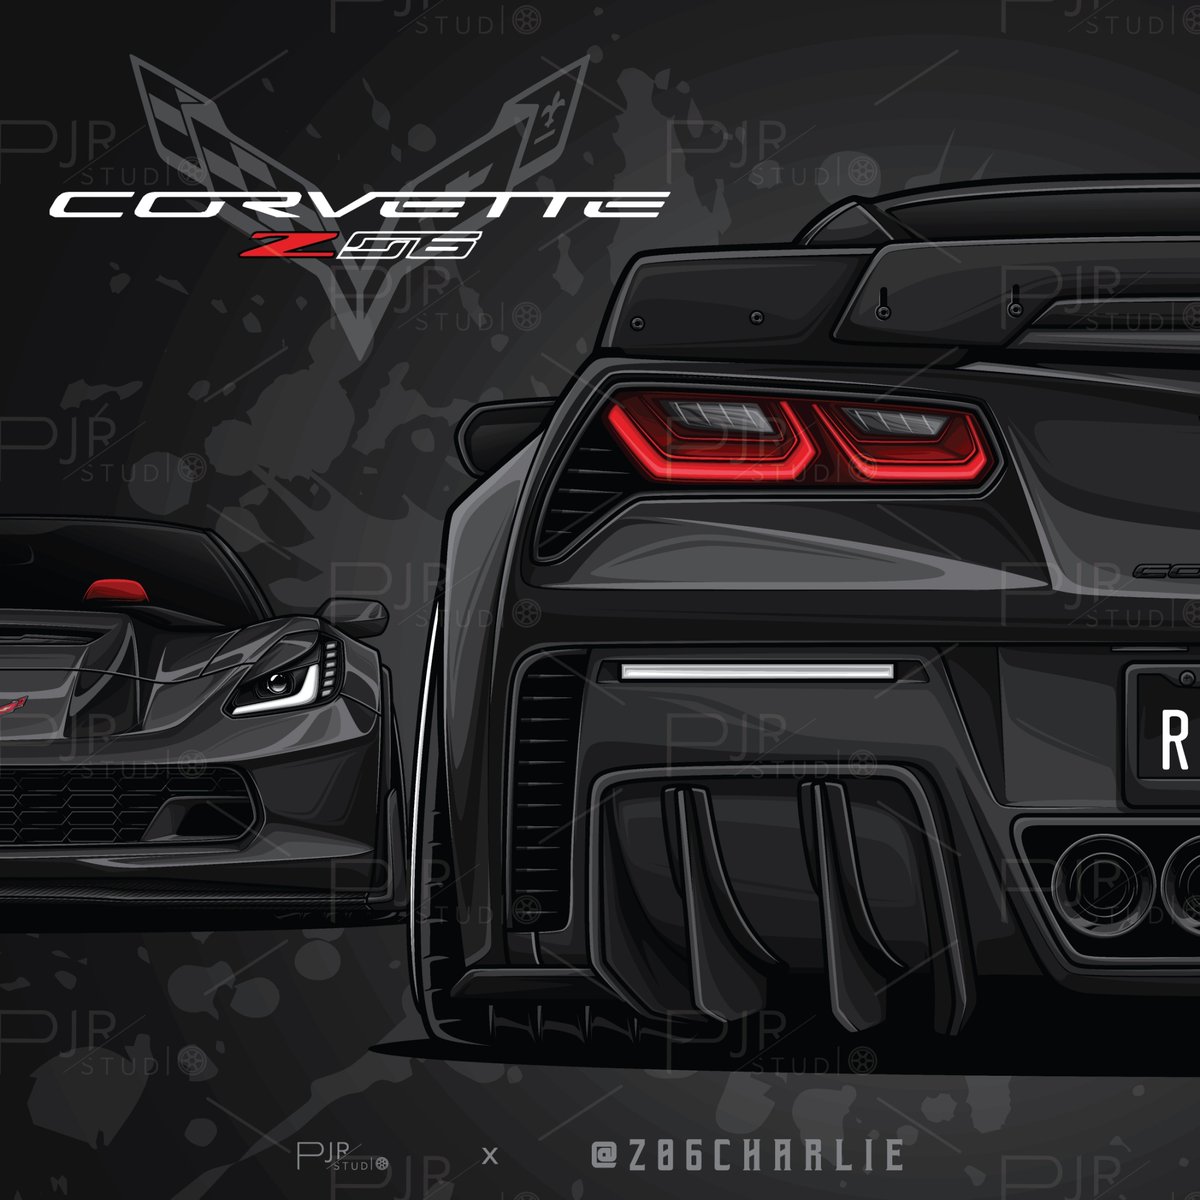 C 7 • Z 0 6
🔑IG : z06charlie
.
Etsy Shop : etsy.com/shop/PjrStudio
Redbubble Shop : pjrstudio.redbubble.com
.
#corvette #corvettec7 #corvettelifestyle #corvettestingray #chevycorvette #c7z06 #c7corvette #c7 #c7stingray #musclecar #stancenation #stancedaily #loweredlifestyle